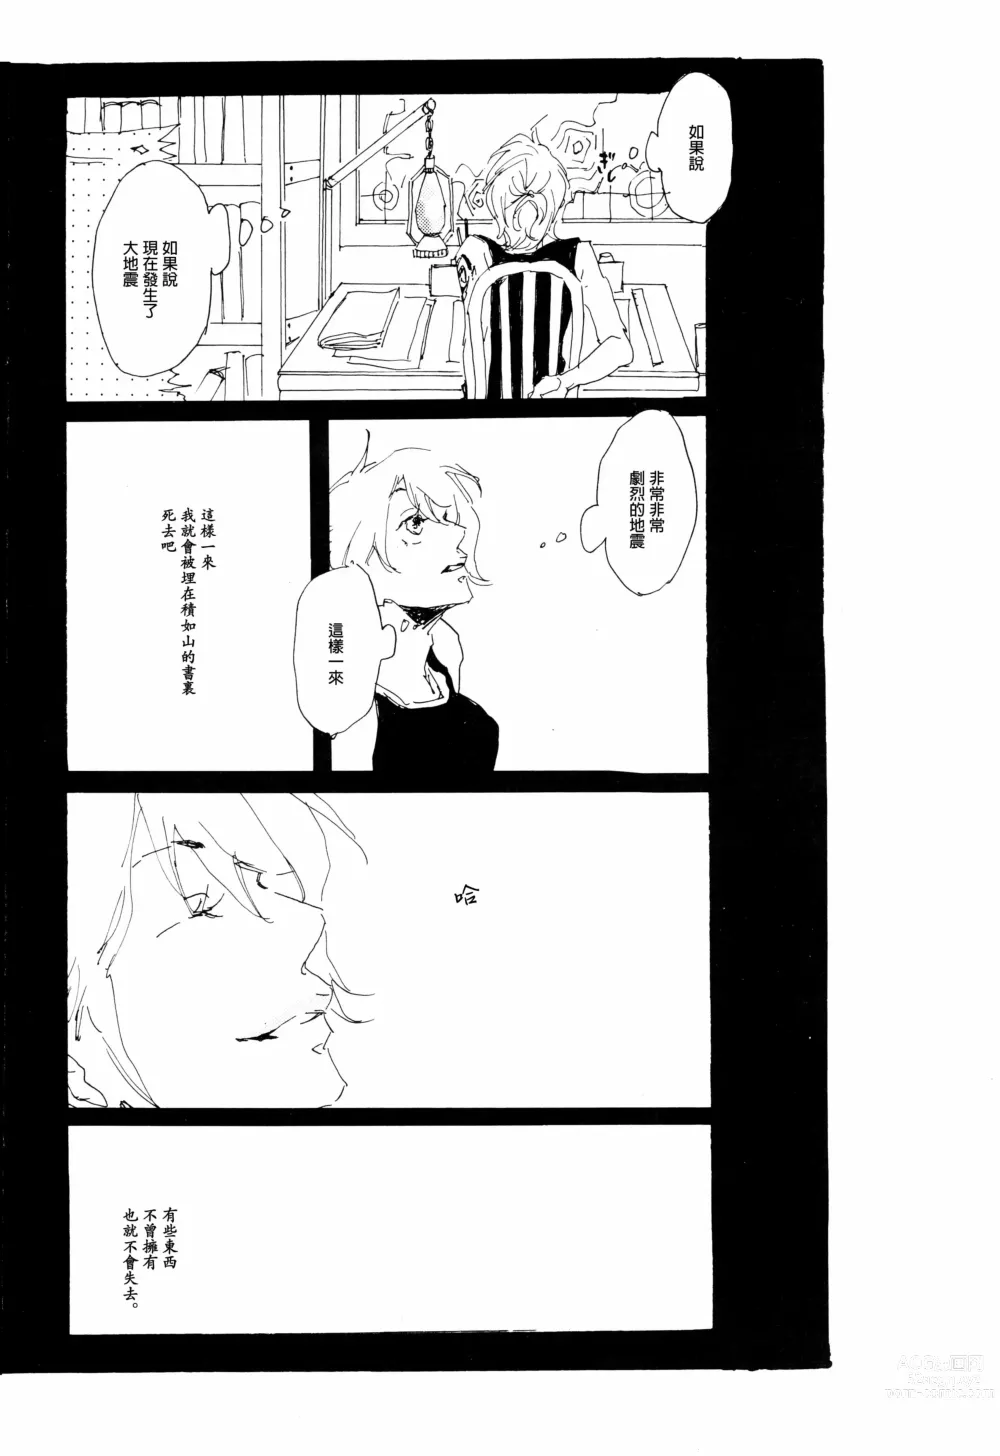 Page 9 of doujinshi 忧郁·与那份没有尽头的悲伤